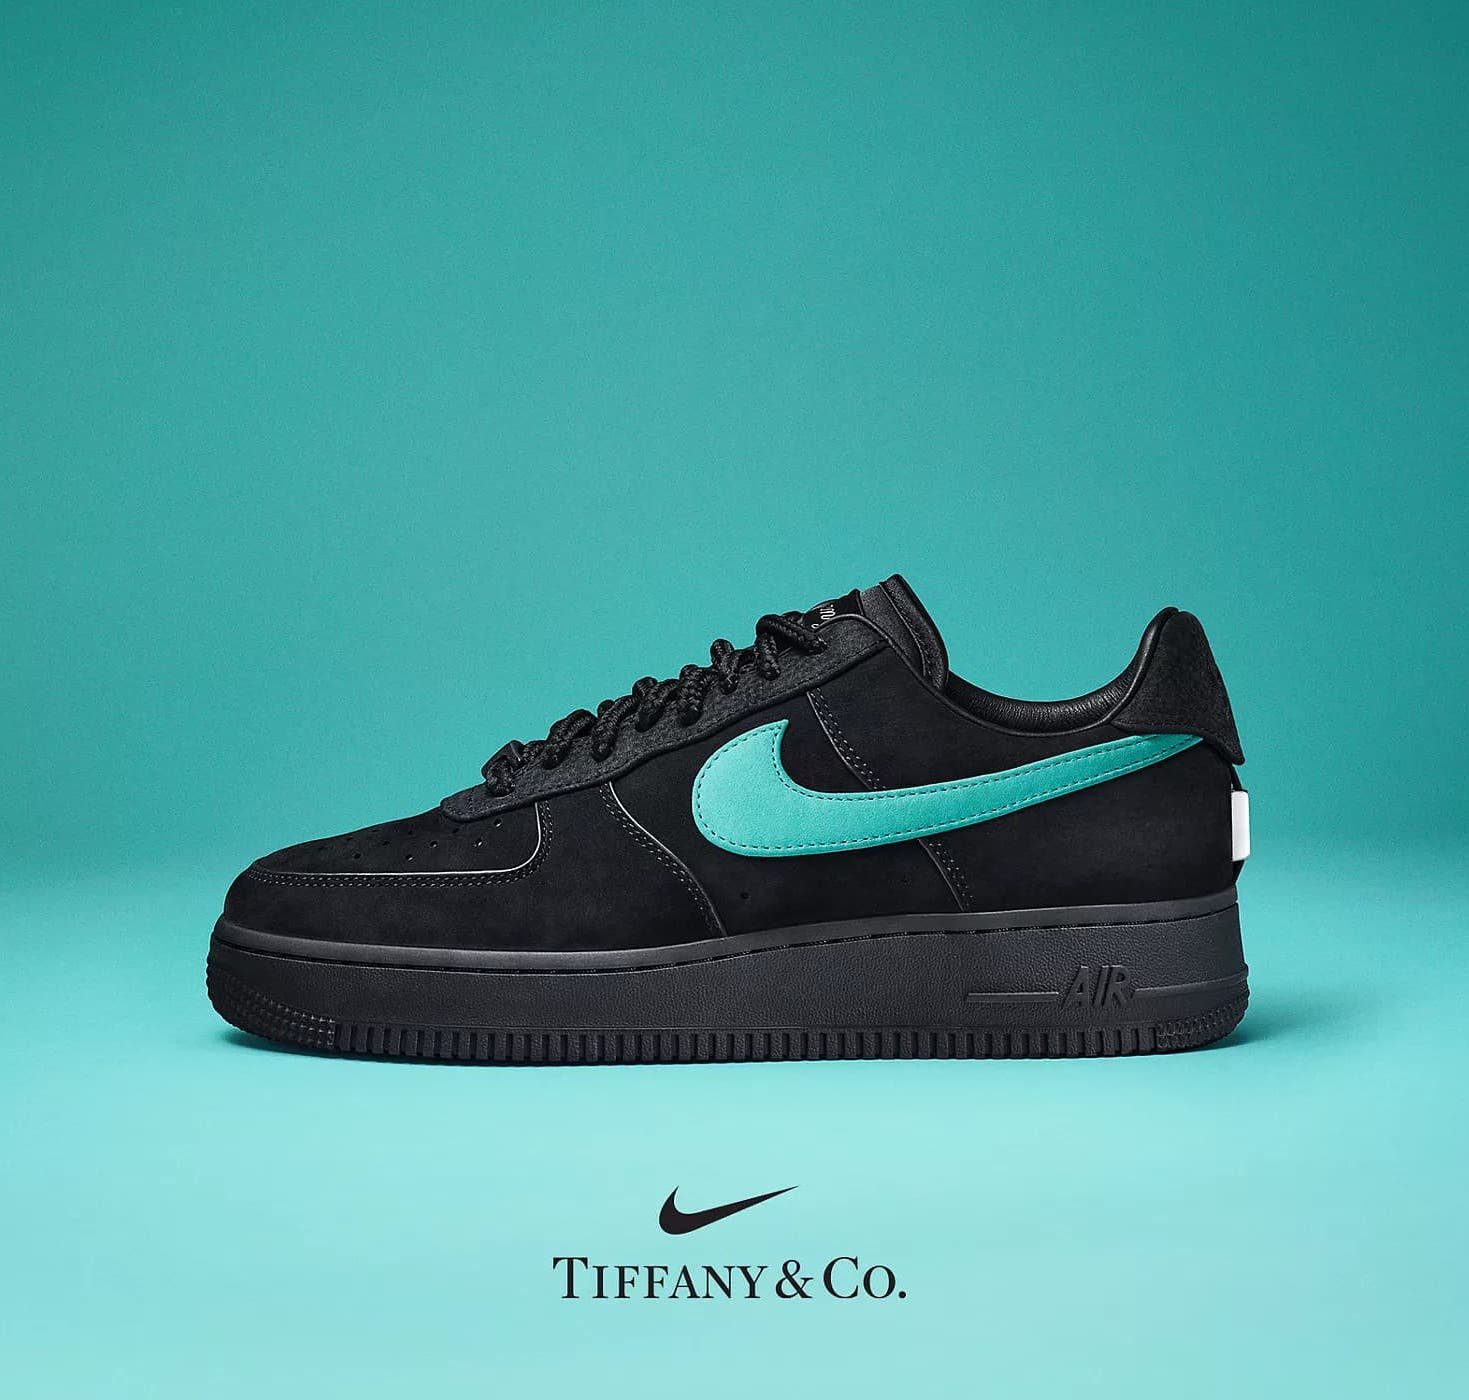 Nike x Tiffany & Co. shoe collaboration